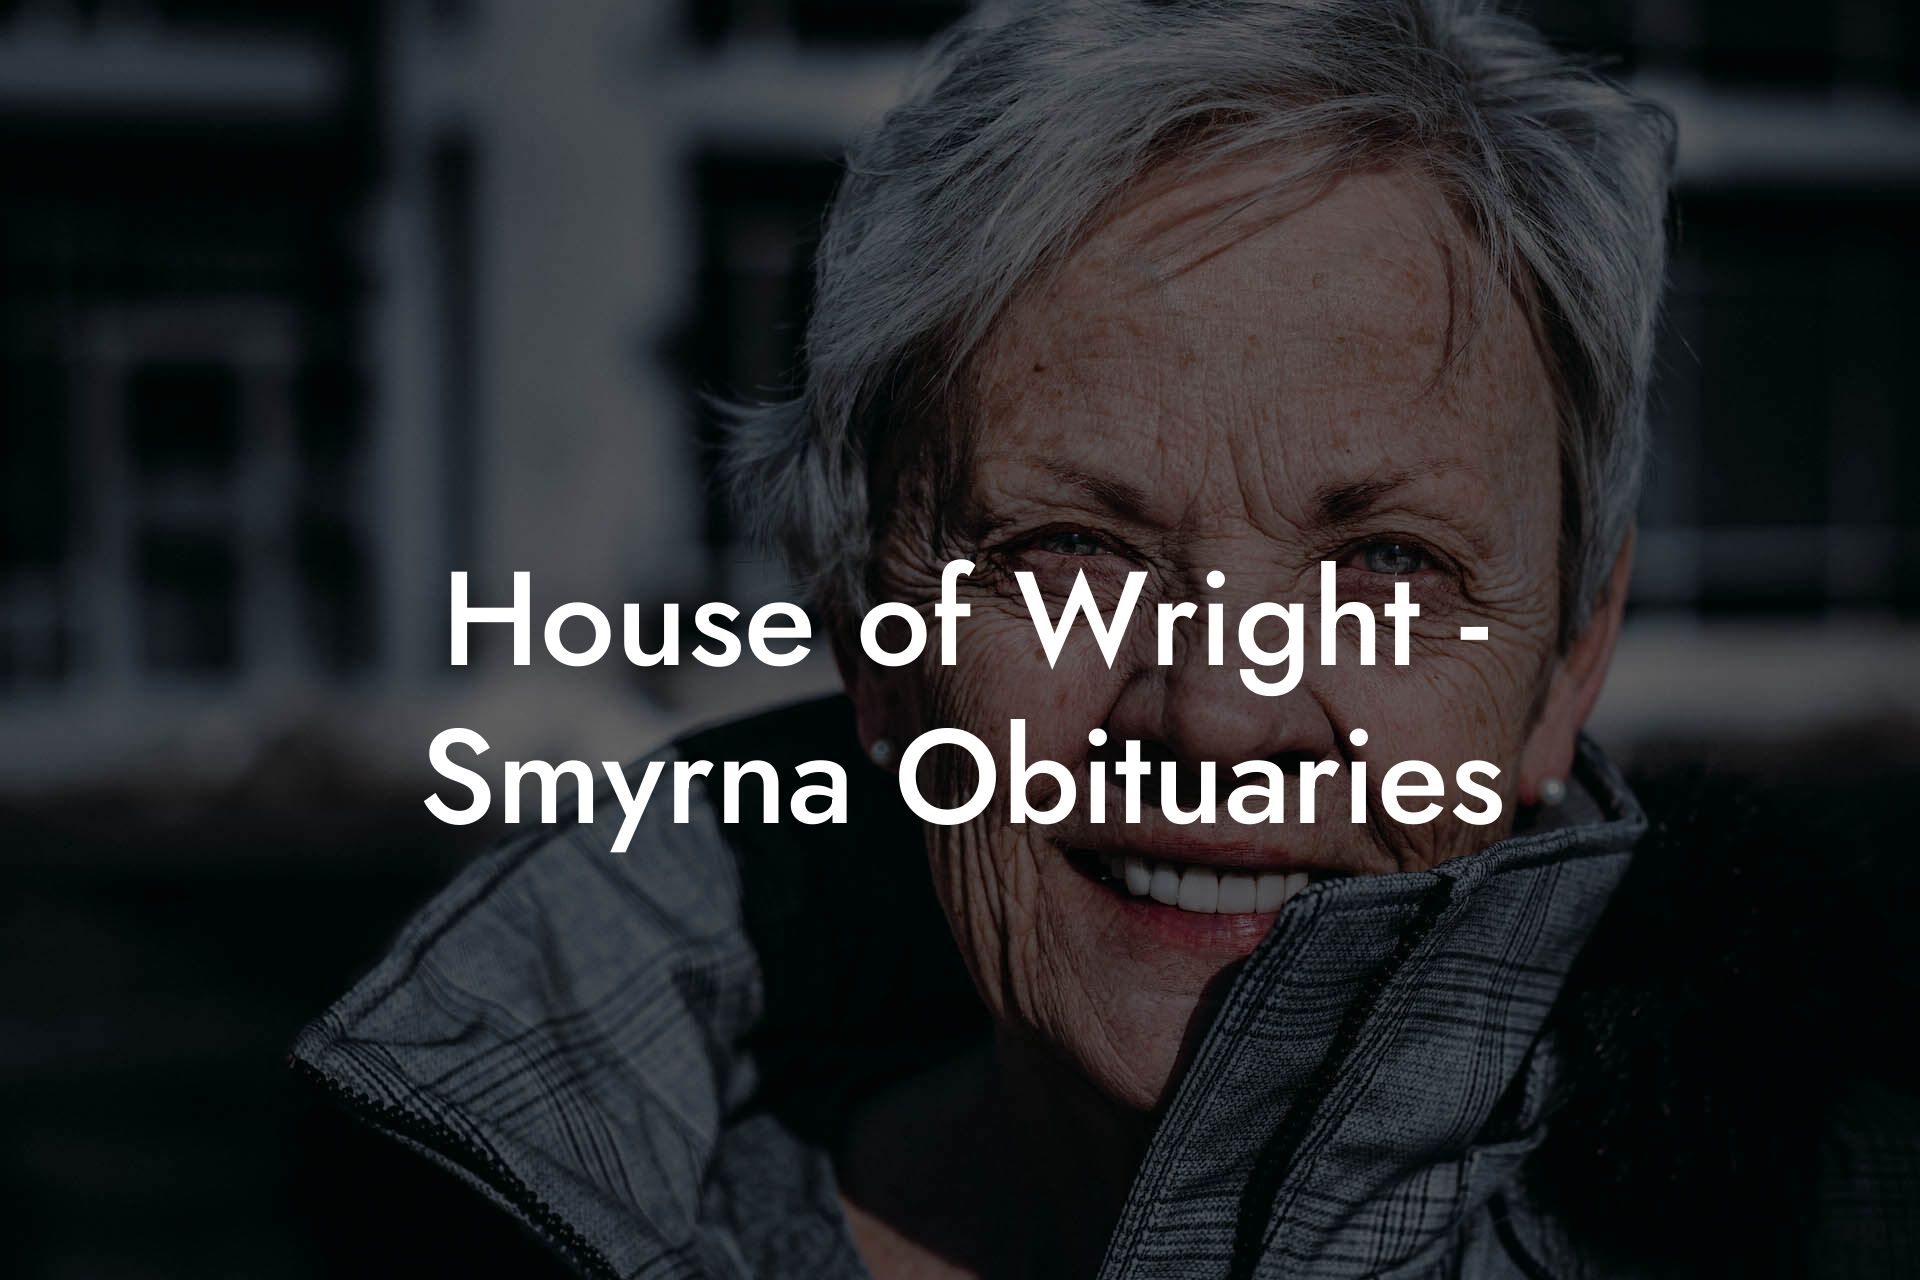 House of Wright - Smyrna Obituaries